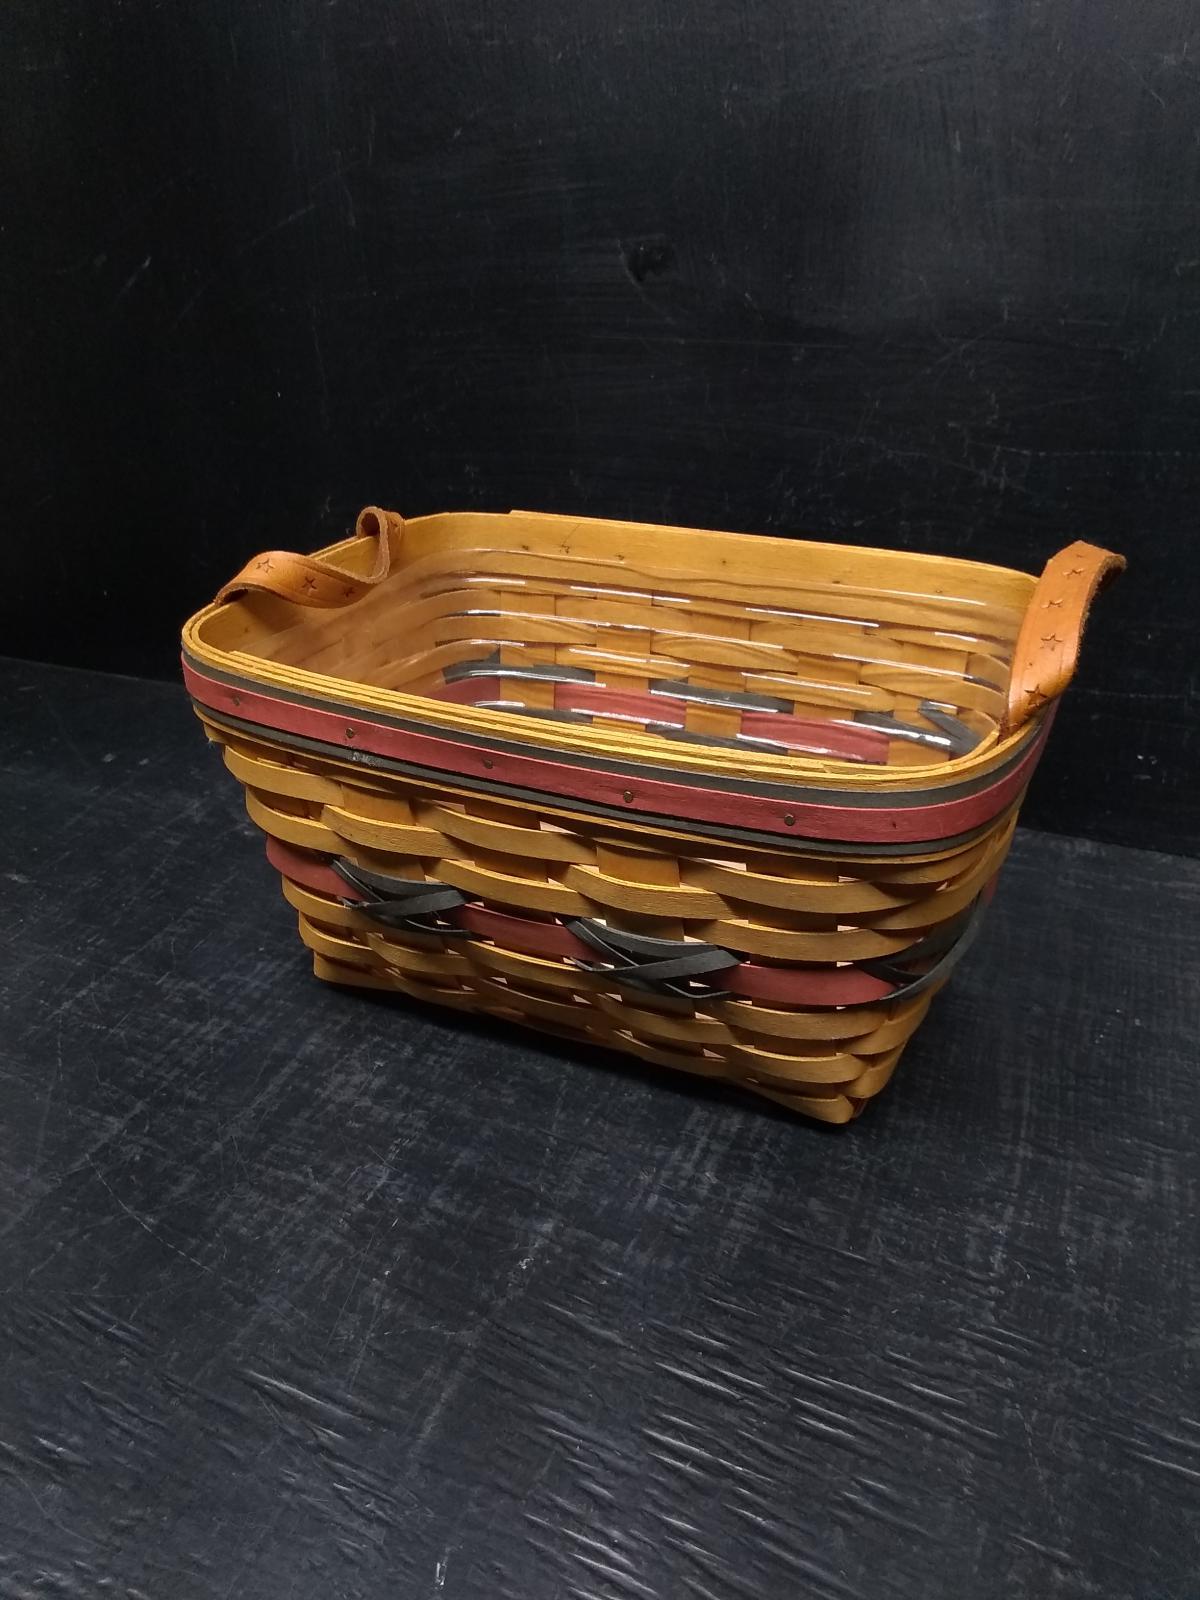 Longaberger Leather Handle Basket